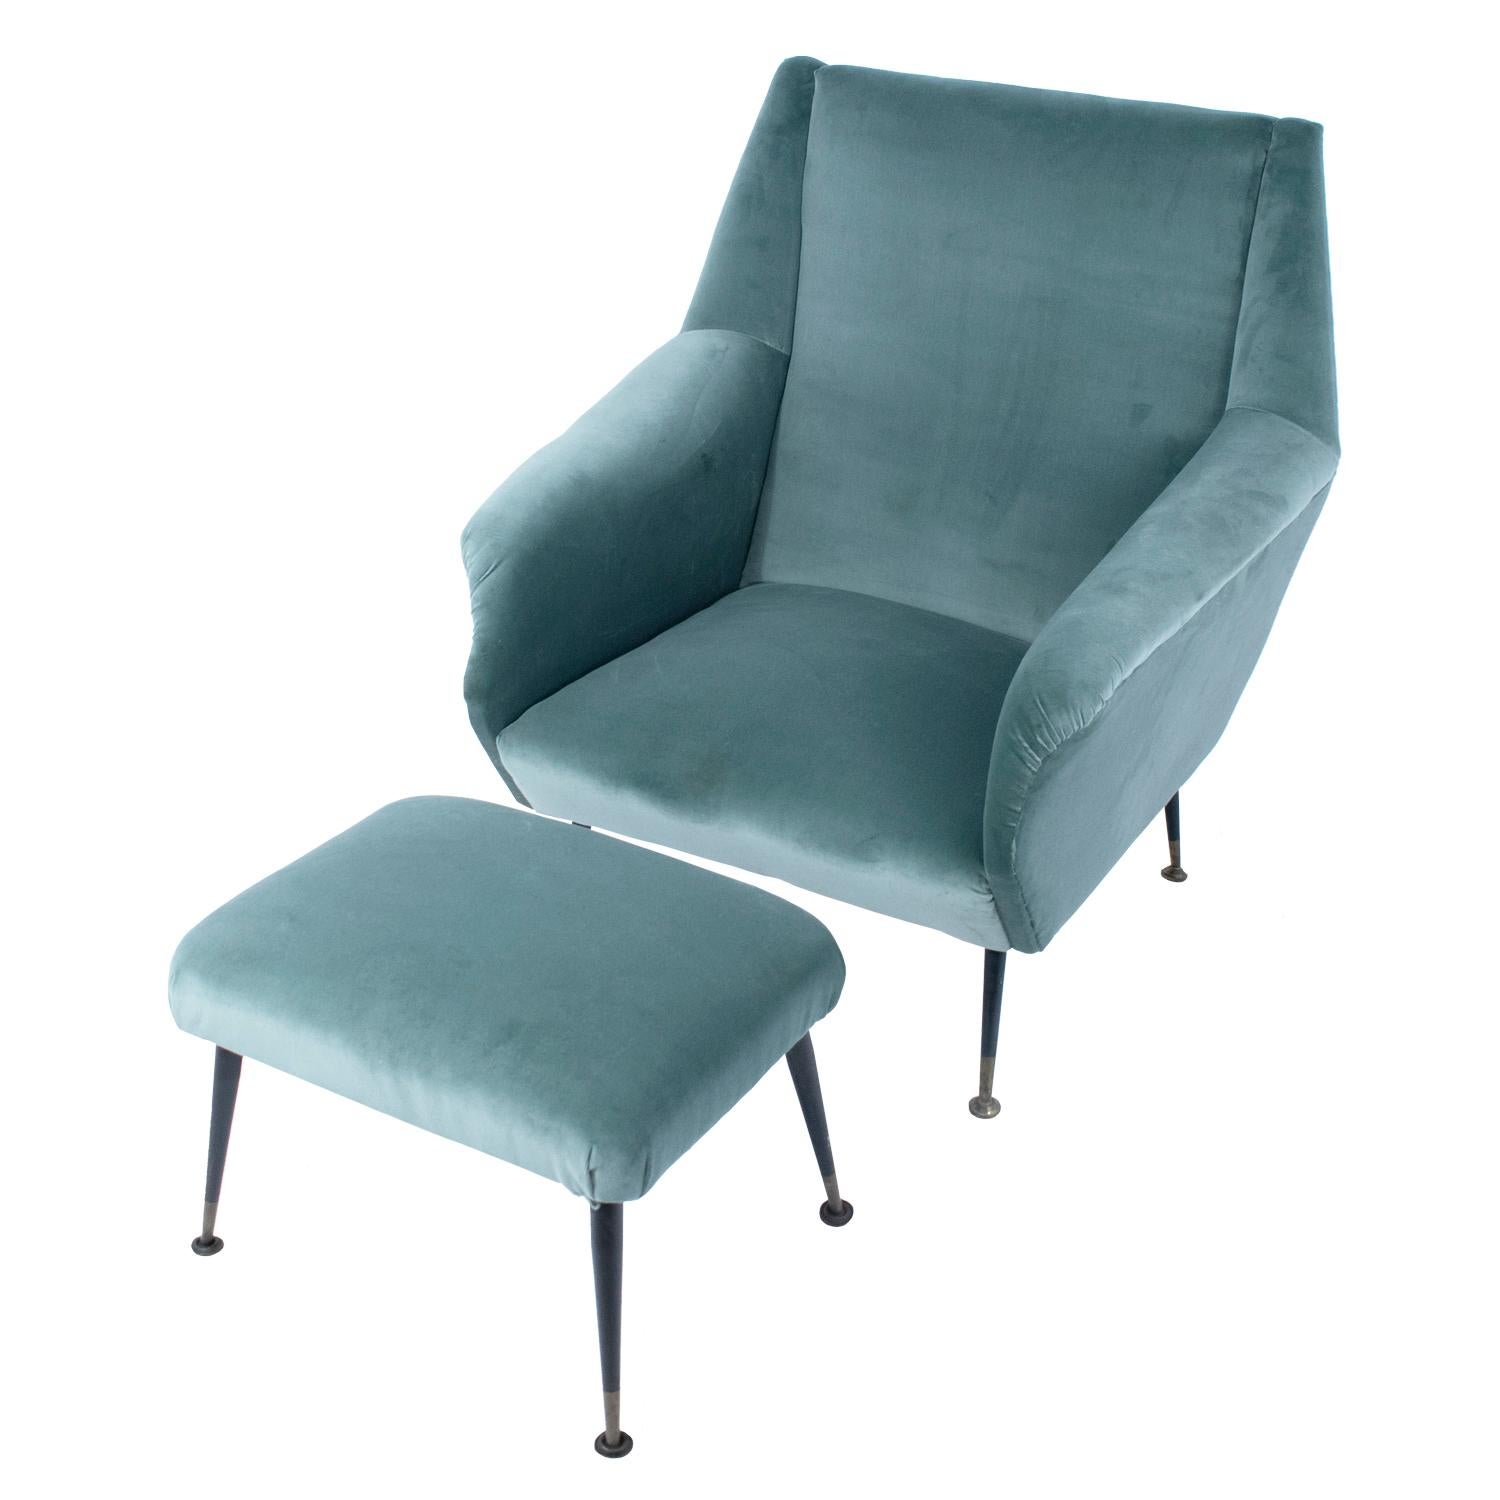 Midcentury Italian armchair and ottoman set, gray blue, 1950s.
New fabric in cotton velvet.